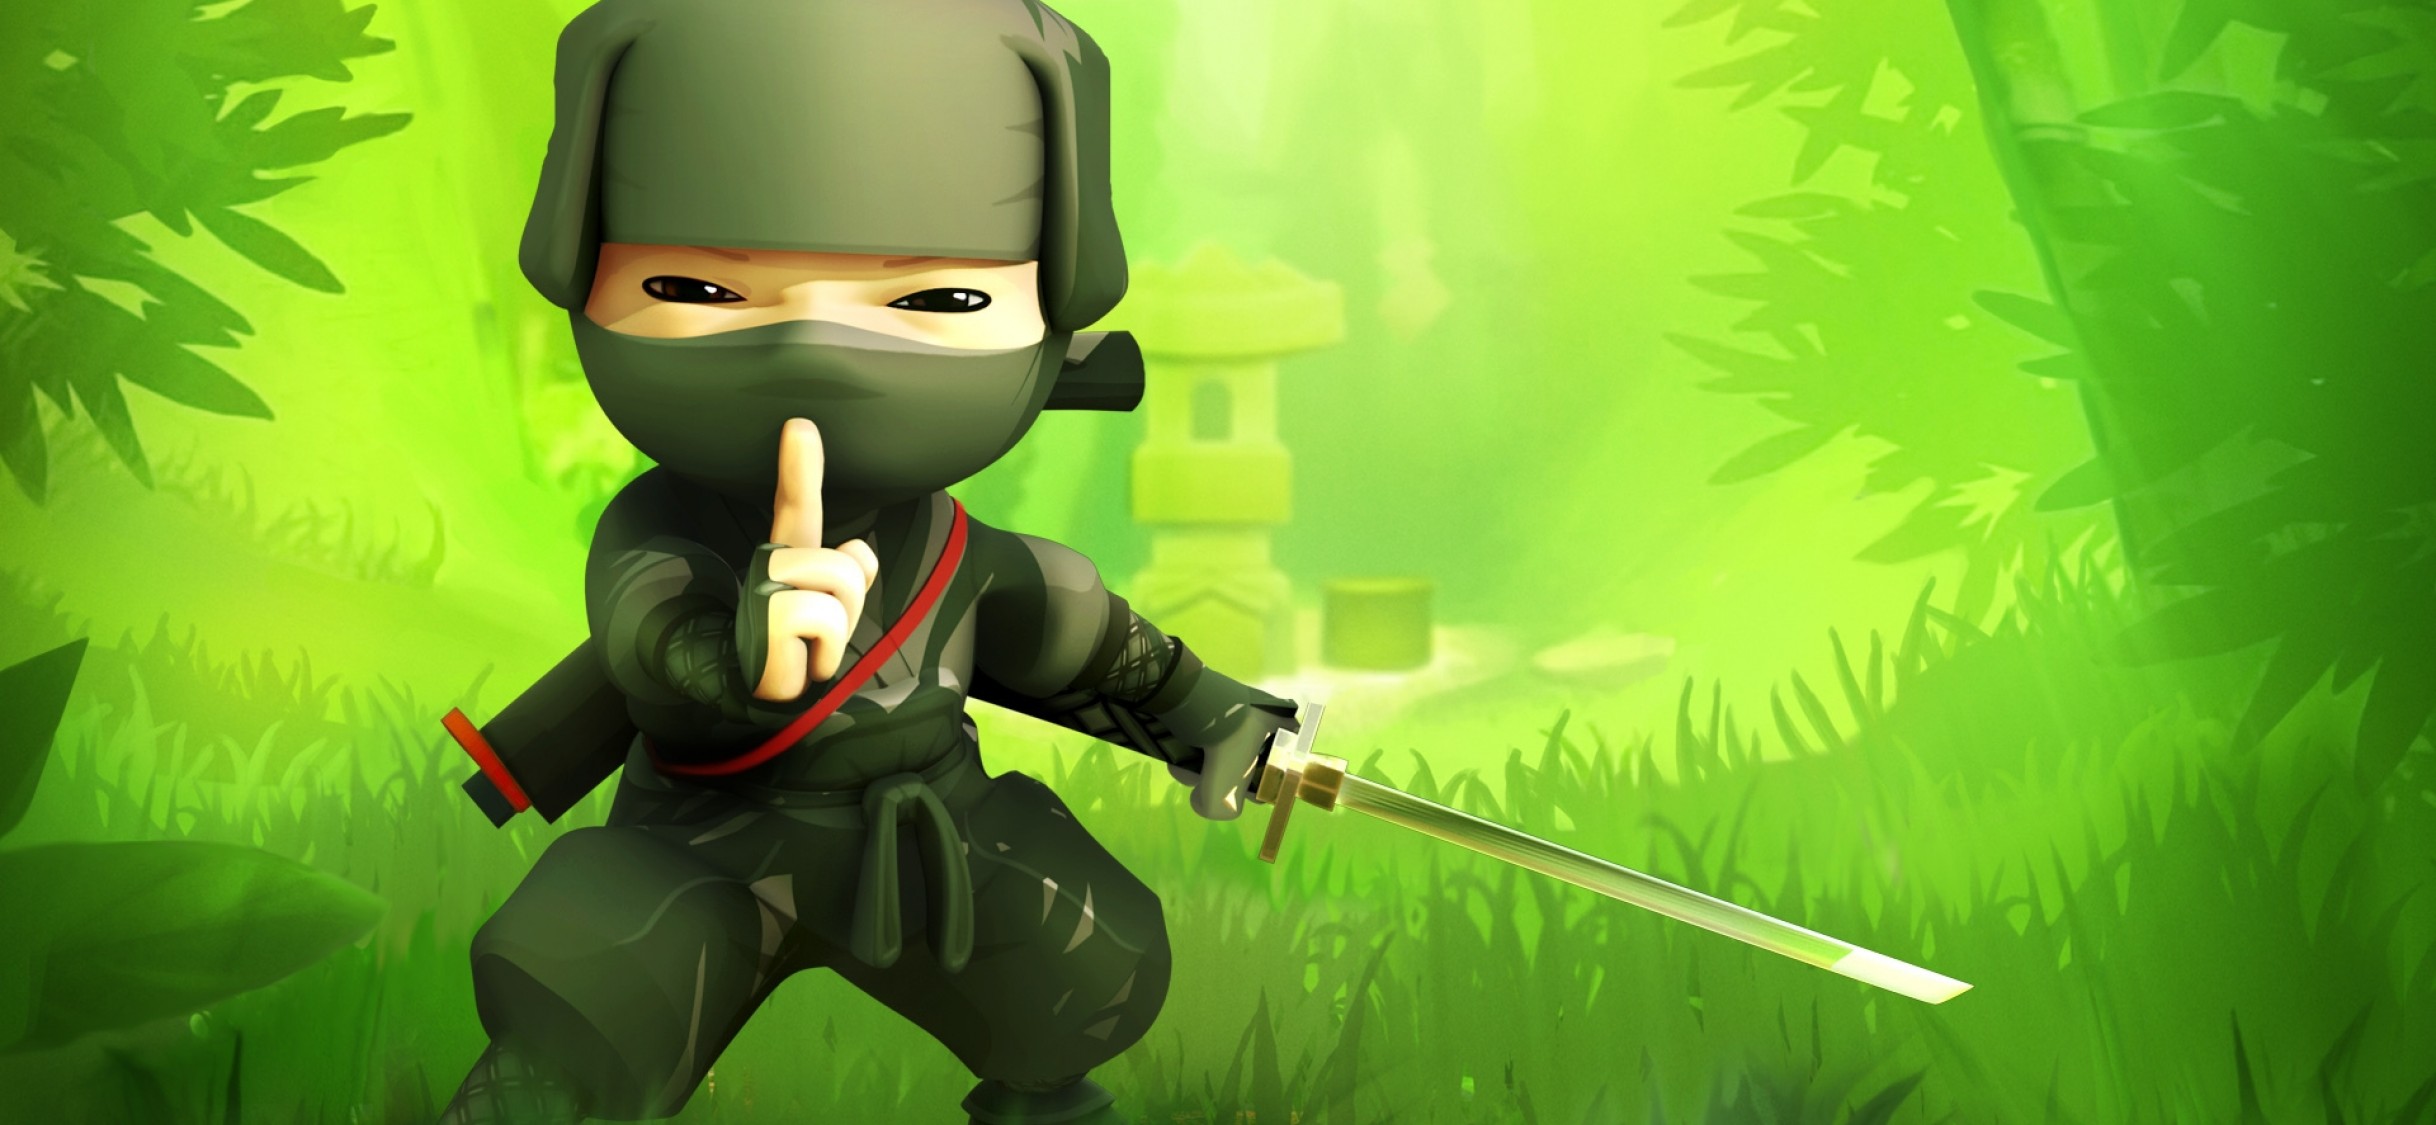 Ninja Cartoon Wallpaper for Desktop and Mobiles